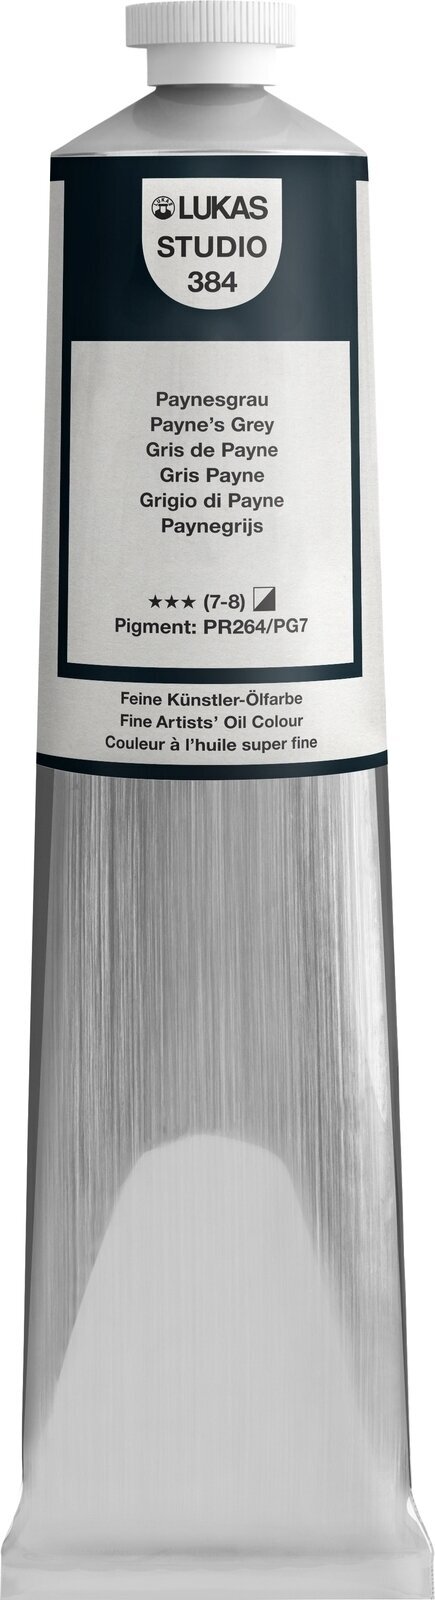 Olajfesték Lukas Studio Oil Paint Aluminium Tube Olajfesték Payne's Grey 200 ml 1 db